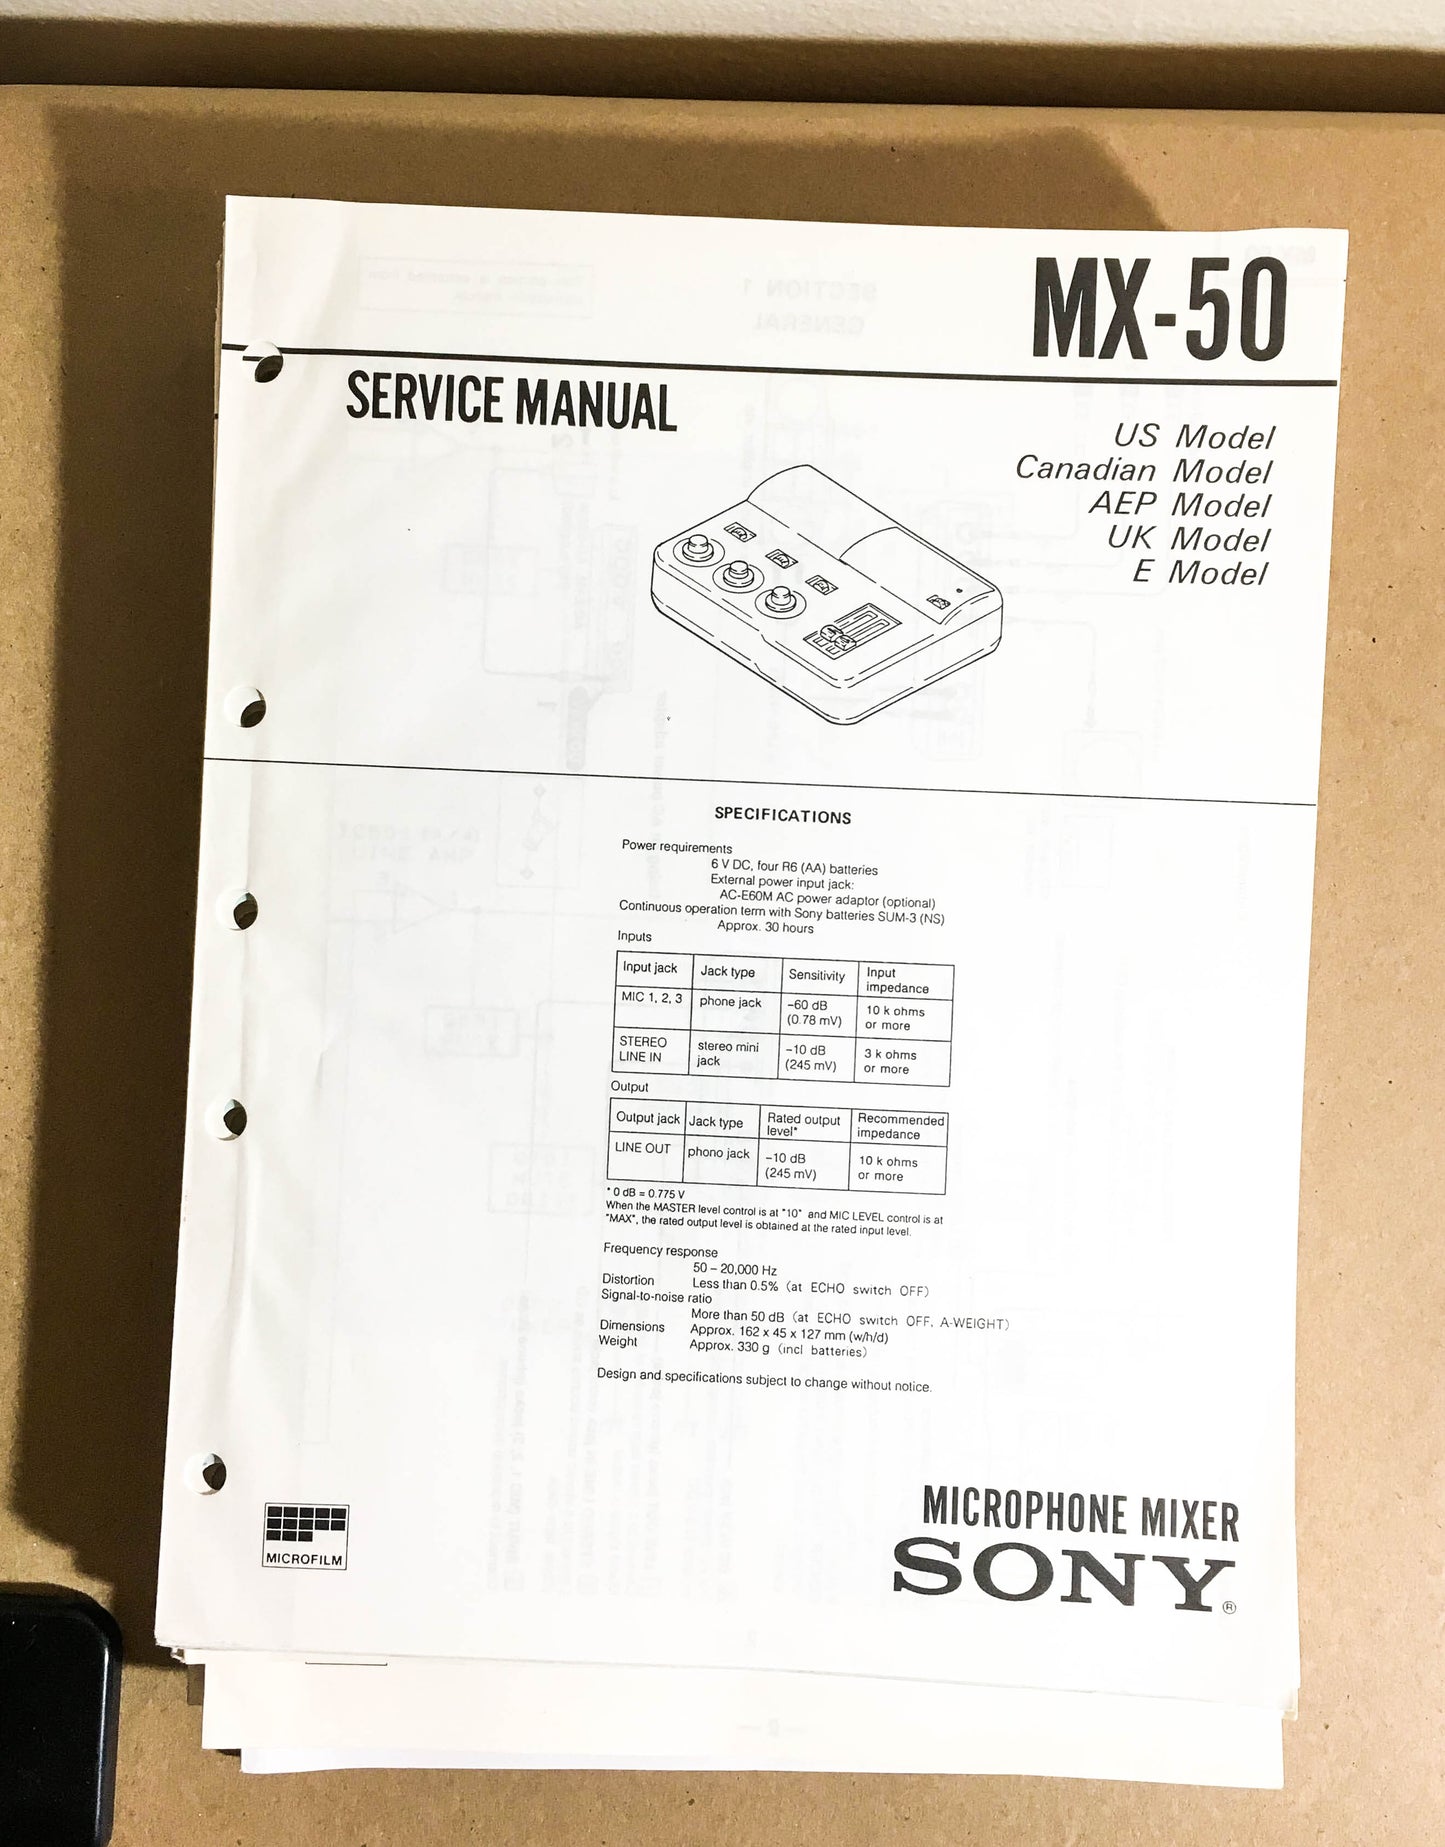 Sony MX-50 Microphone Mixer  Service Manual *Original*